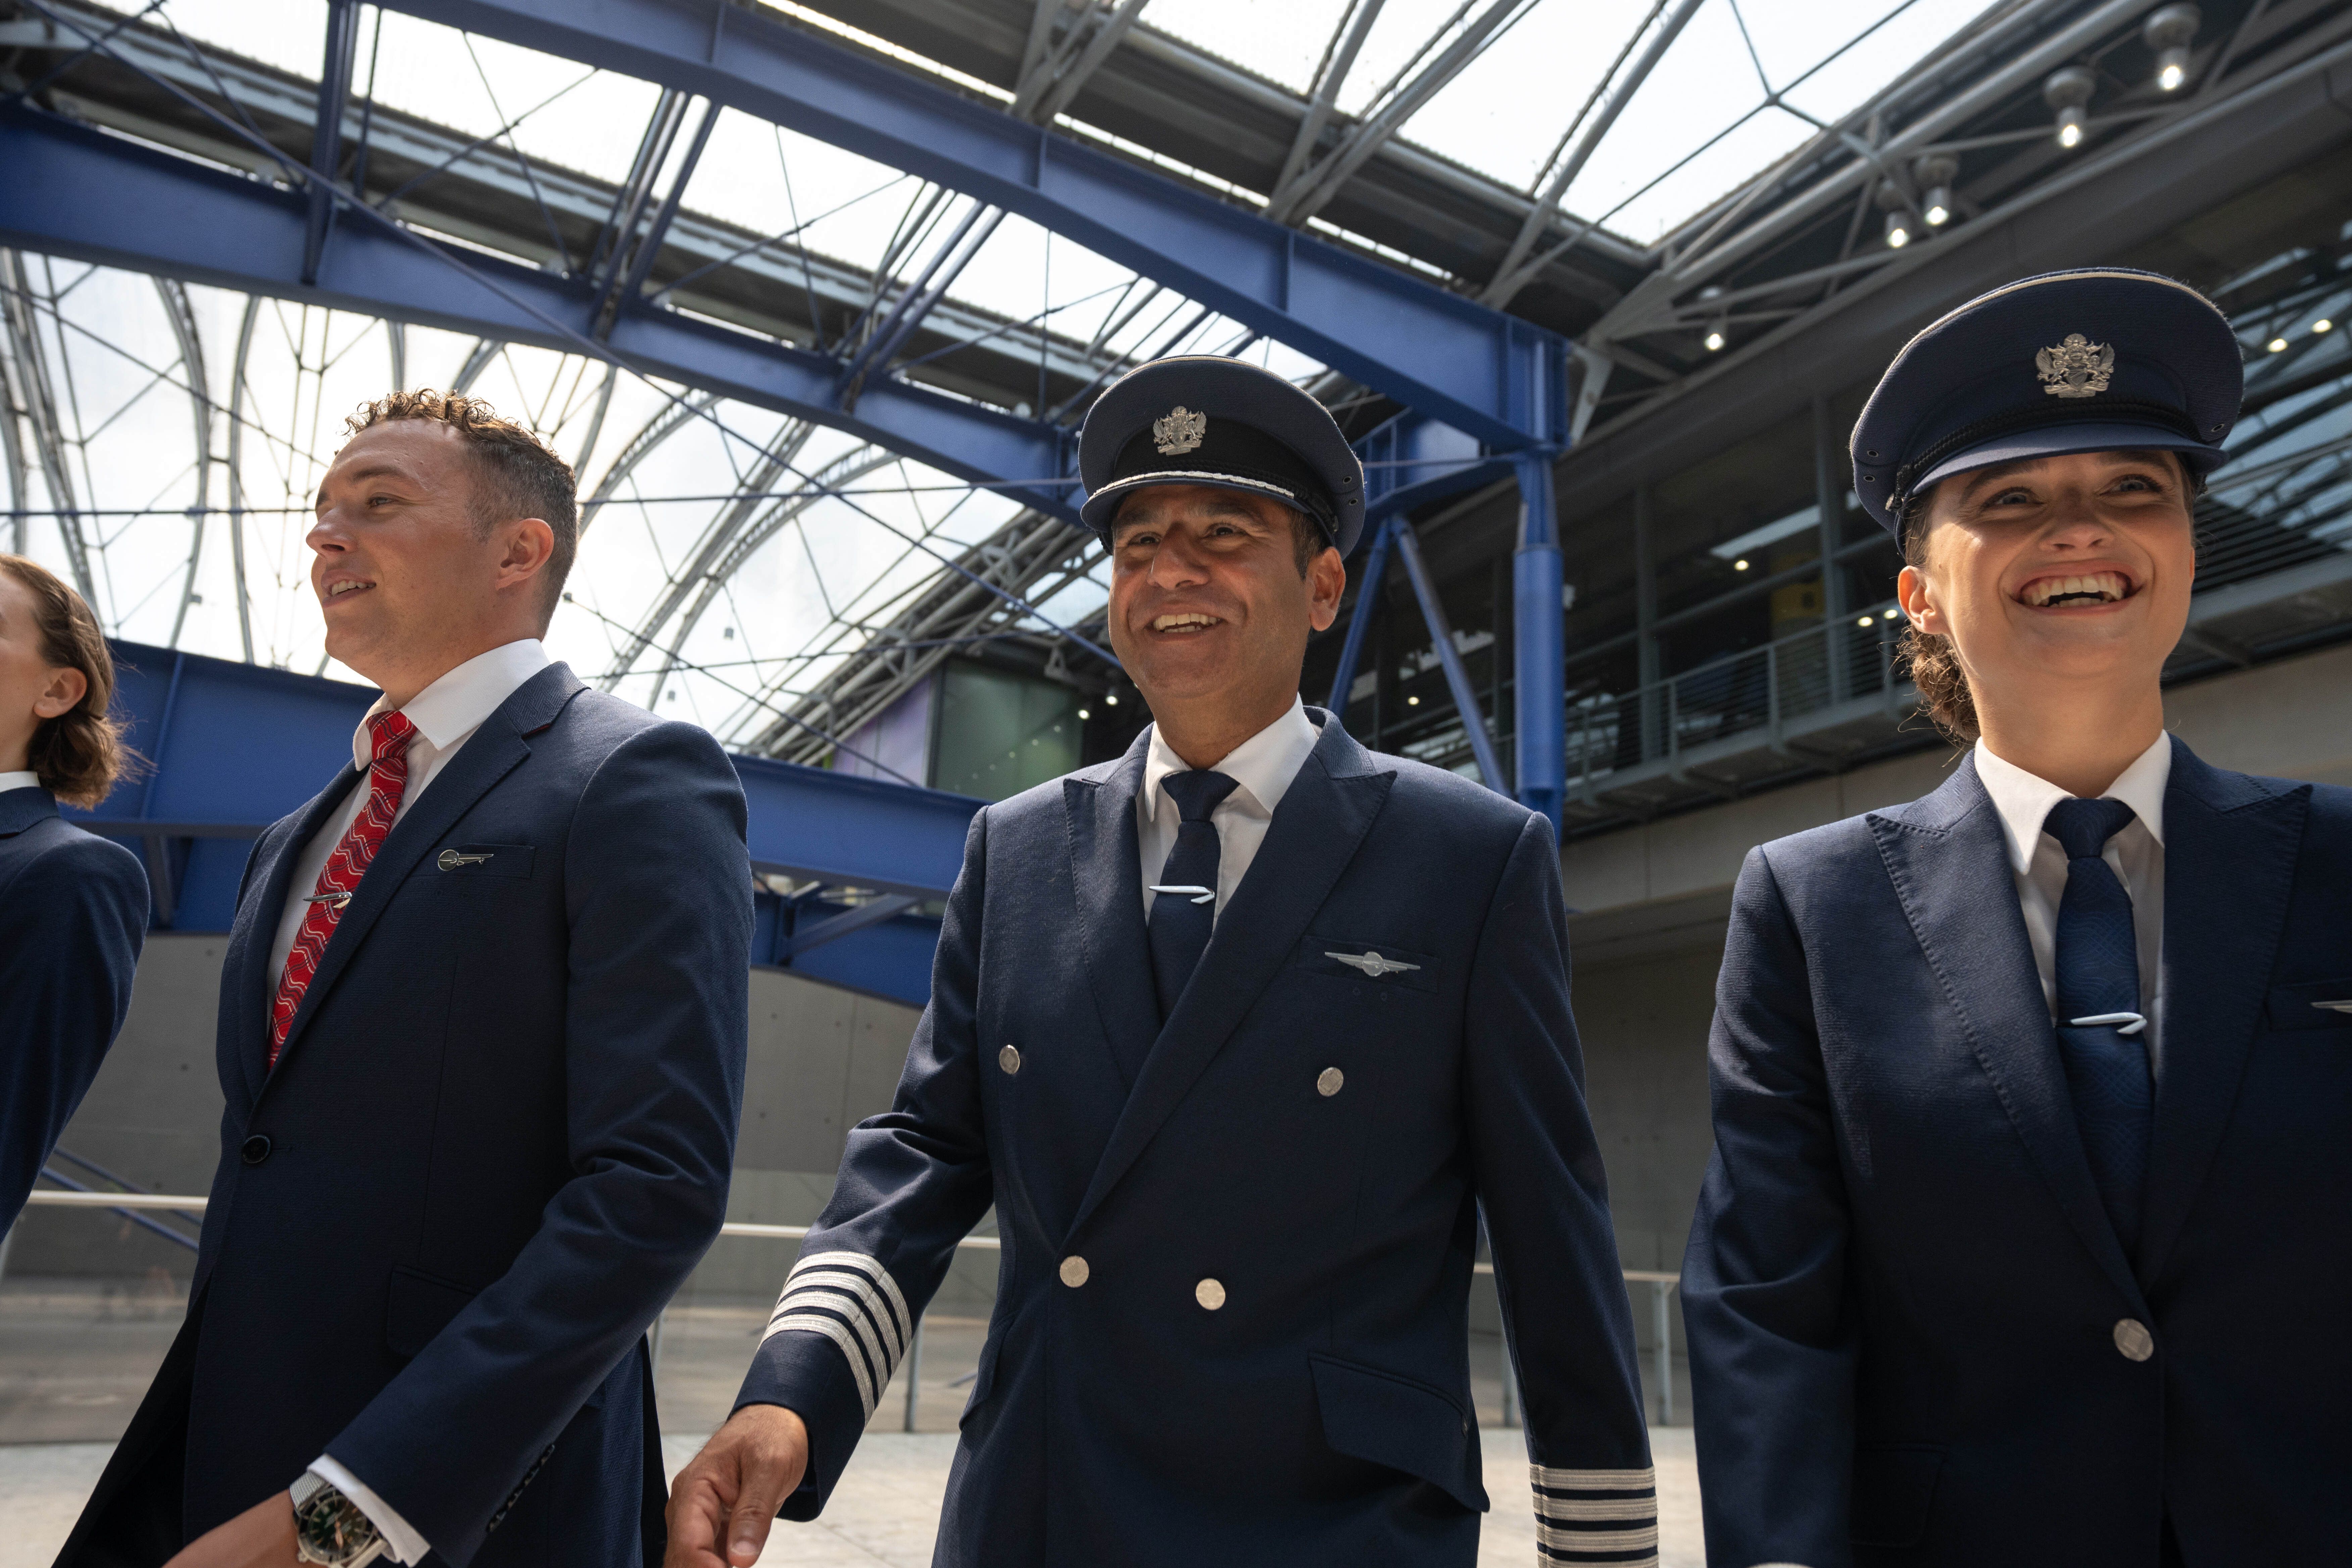 British Airways pilots and cabin crew.